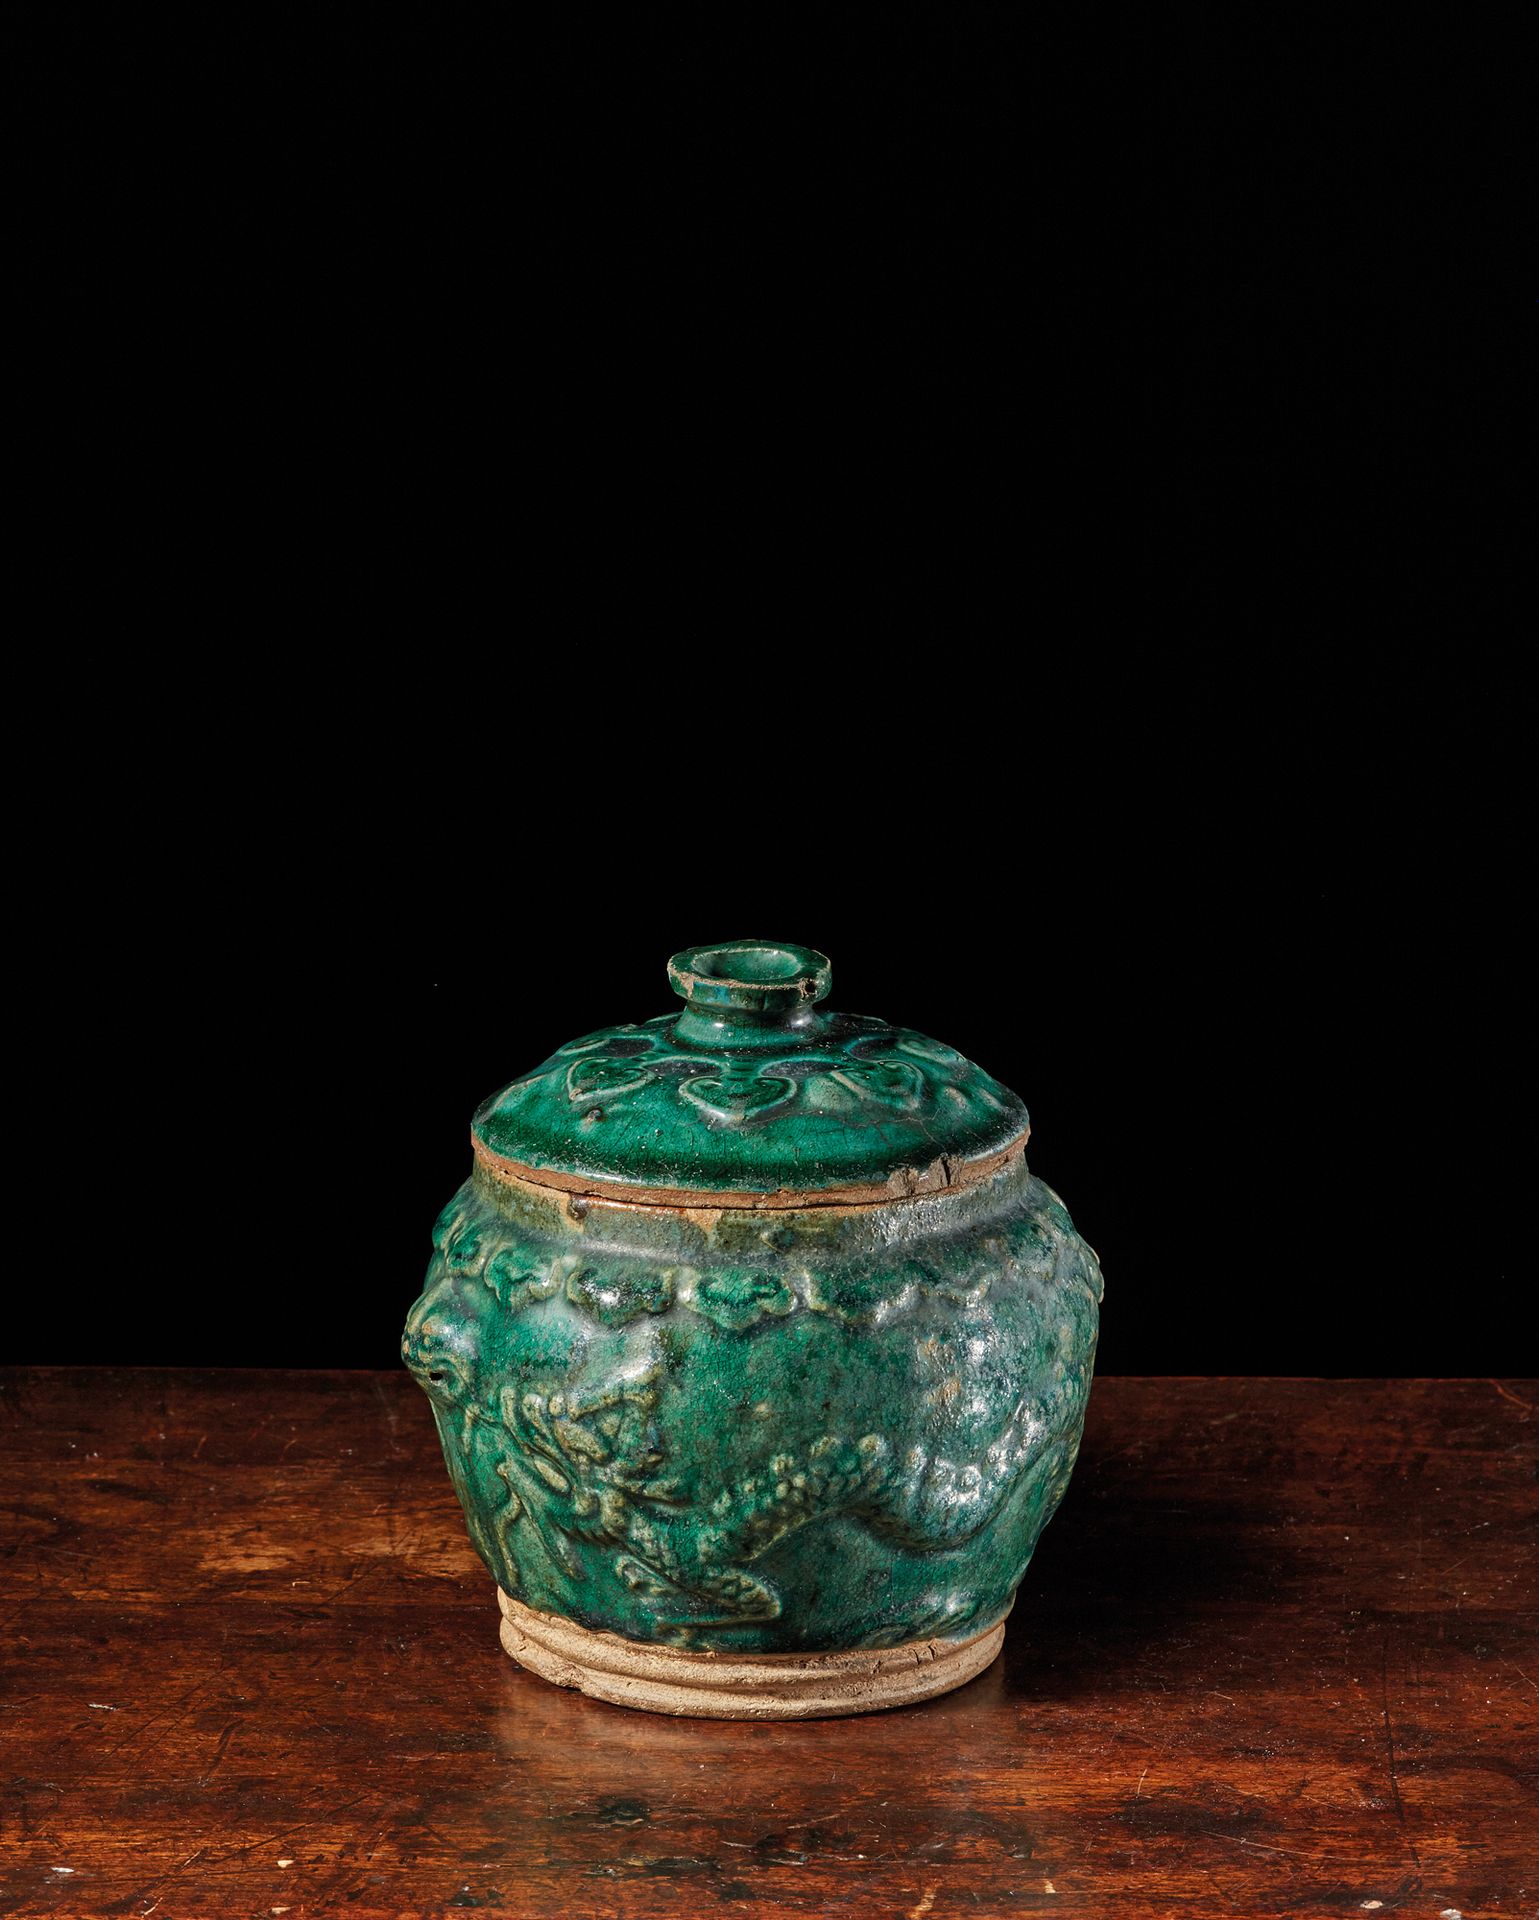 CHINE - XIXe siècle 绿松石釉炻器盖罐，釉下模印龙凤纹，边缘饰以灵芝楣。两个狮子头形状的把手。(小事故)。
高17厘米